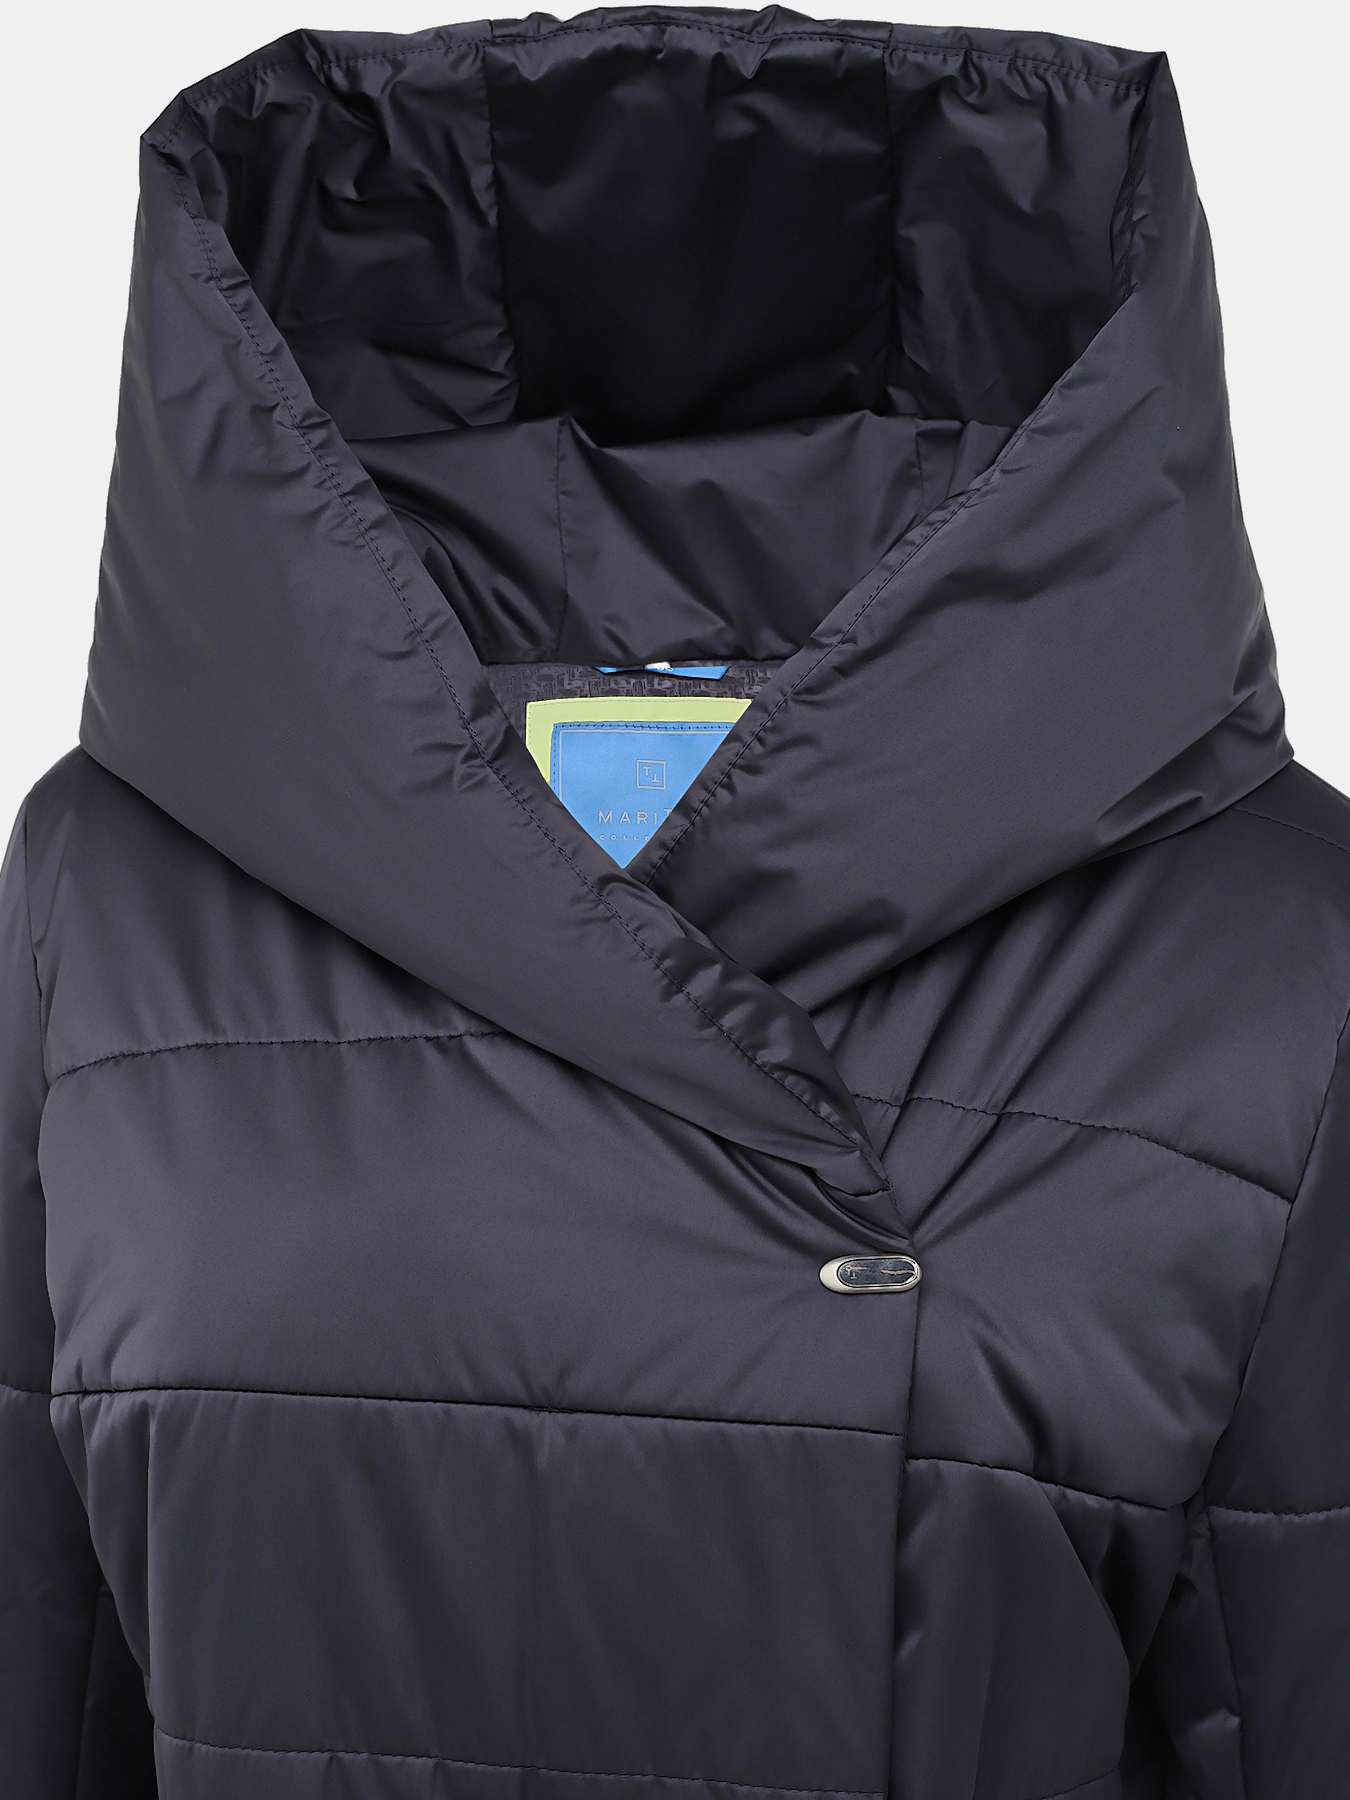 Пальто зимнее Maritta 433550-022, цвет темно-синий, размер 48 - фото 5